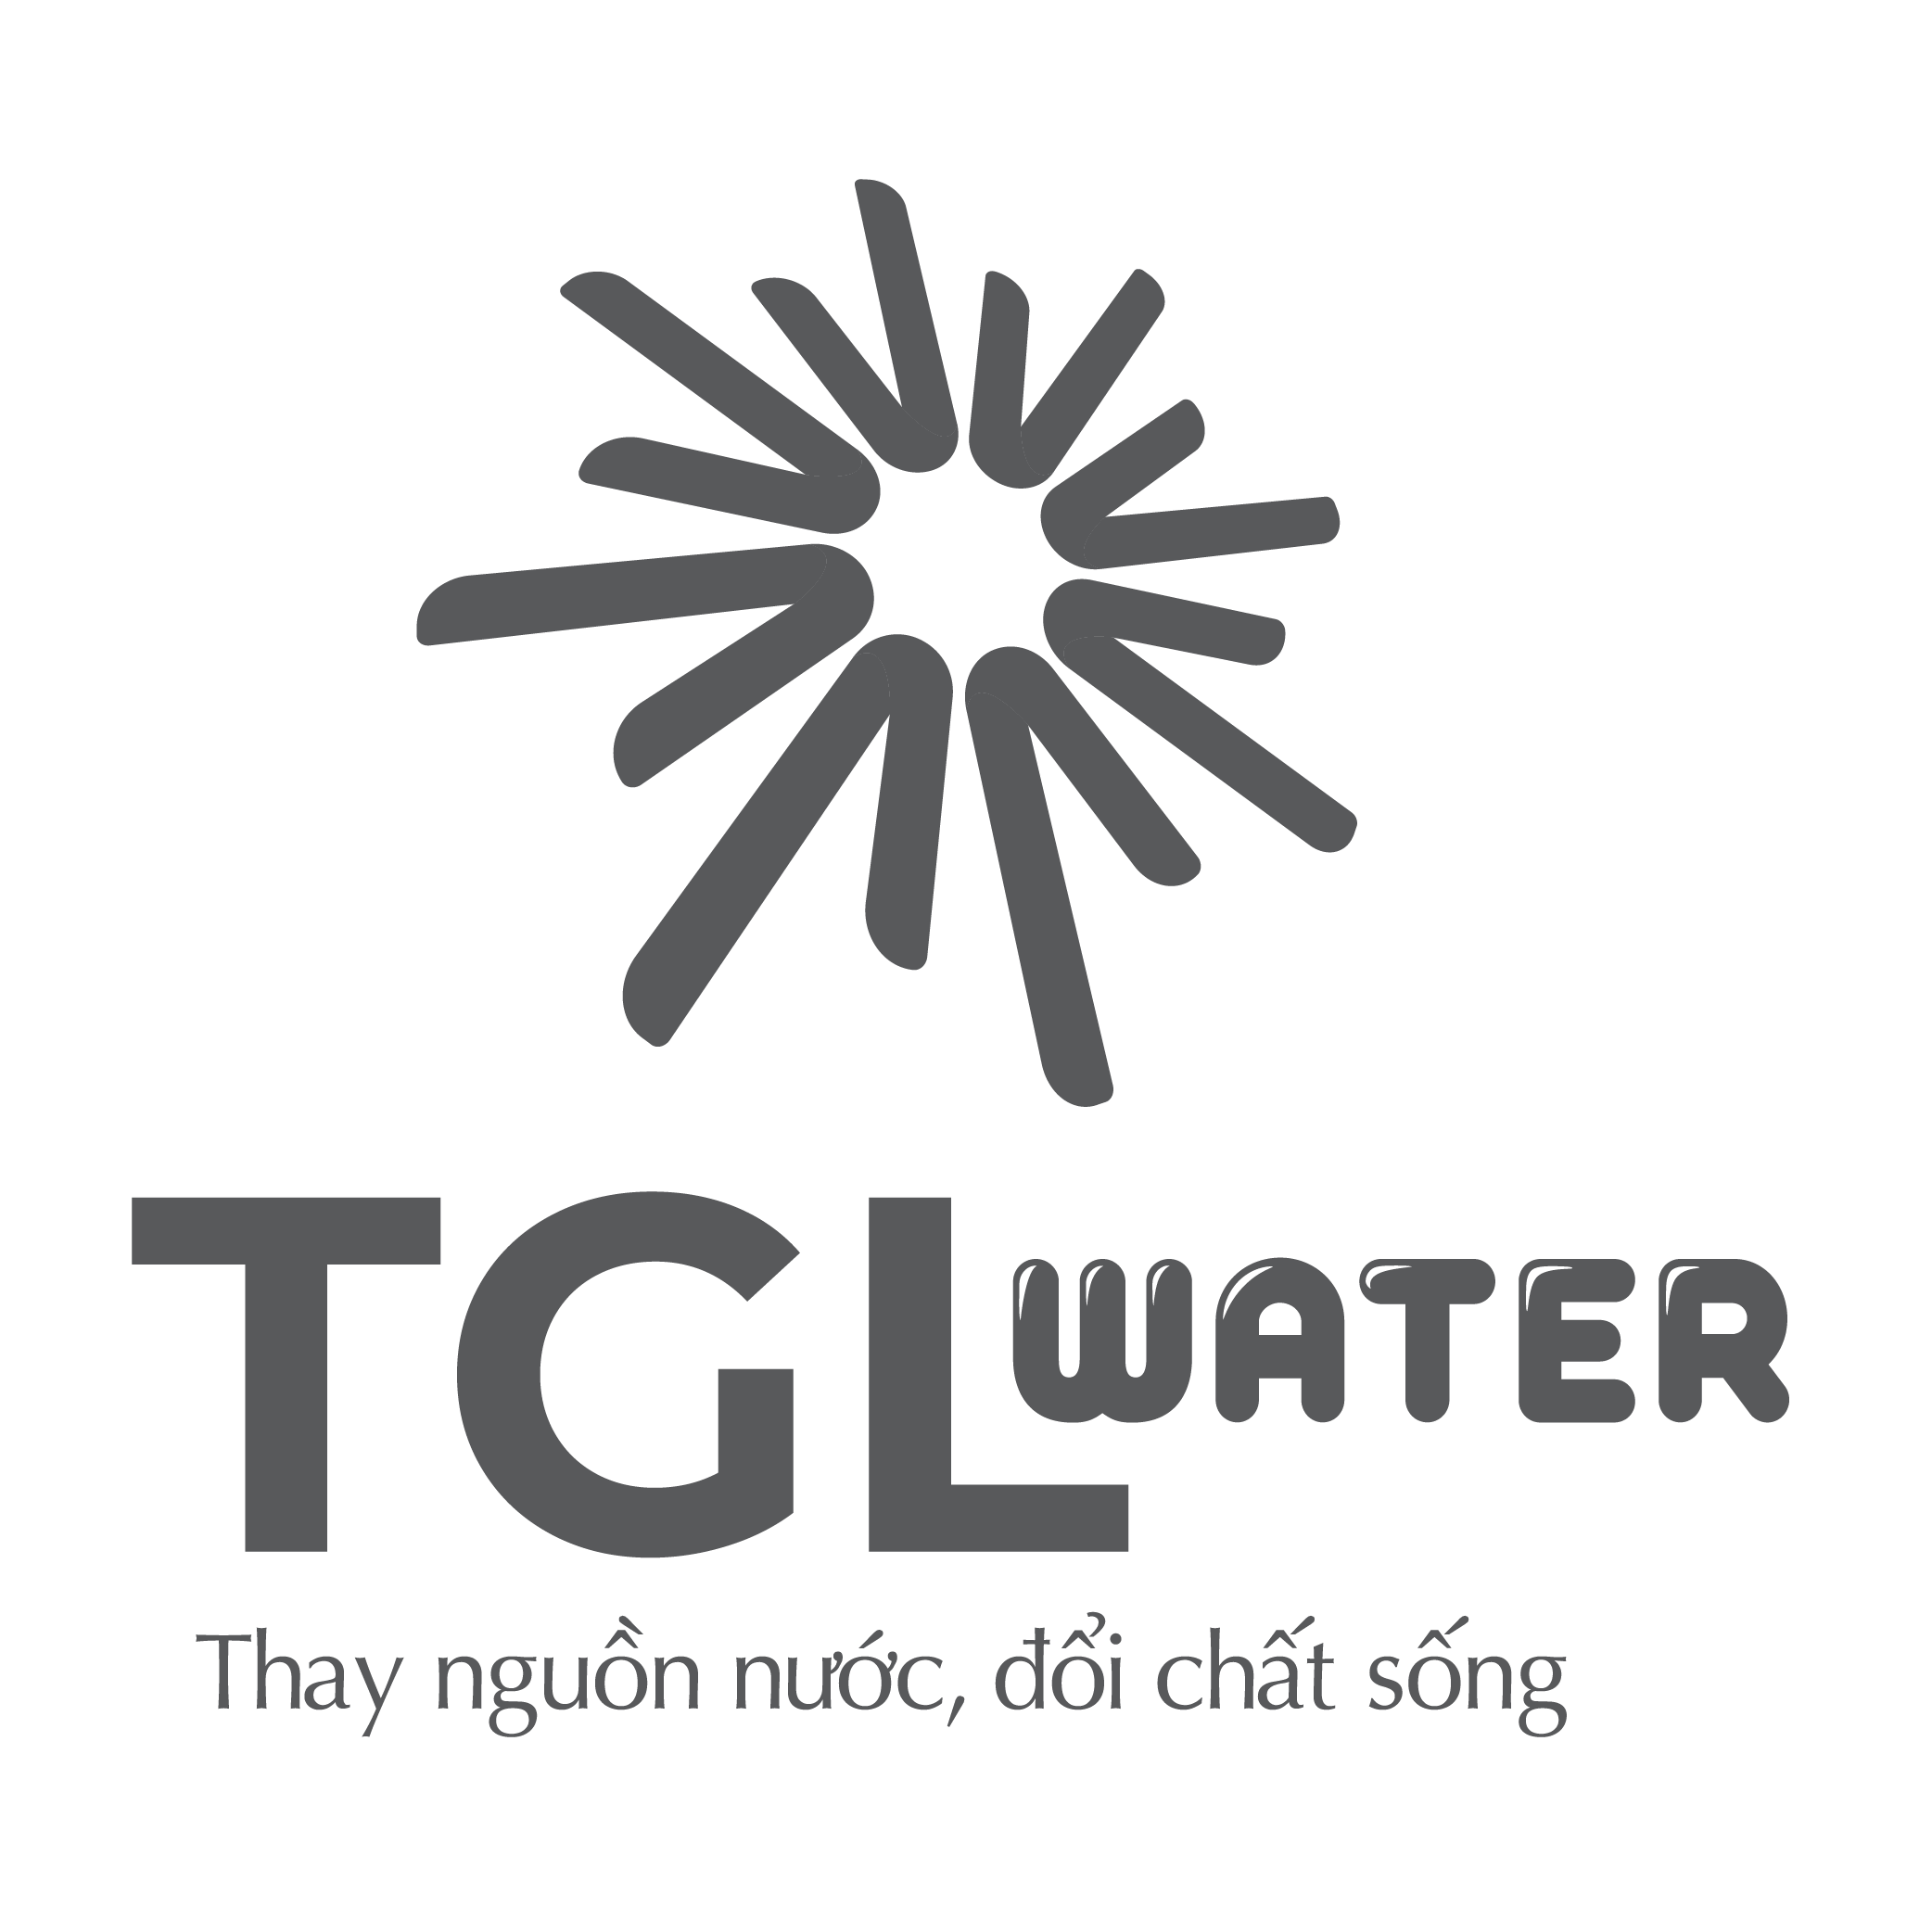 TGL water